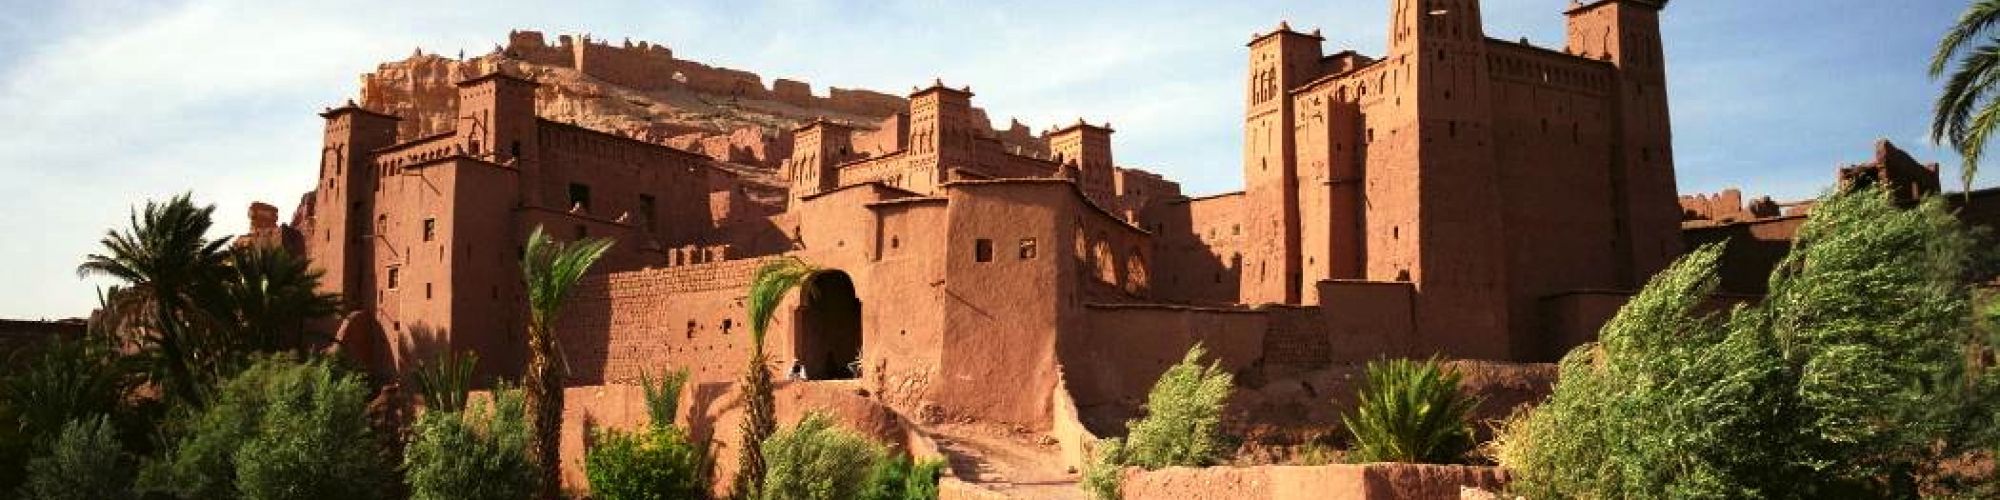 Ait_Benhaddou_Morocco_photo_tour_lavelle_banner_2000_500_80_s_c1